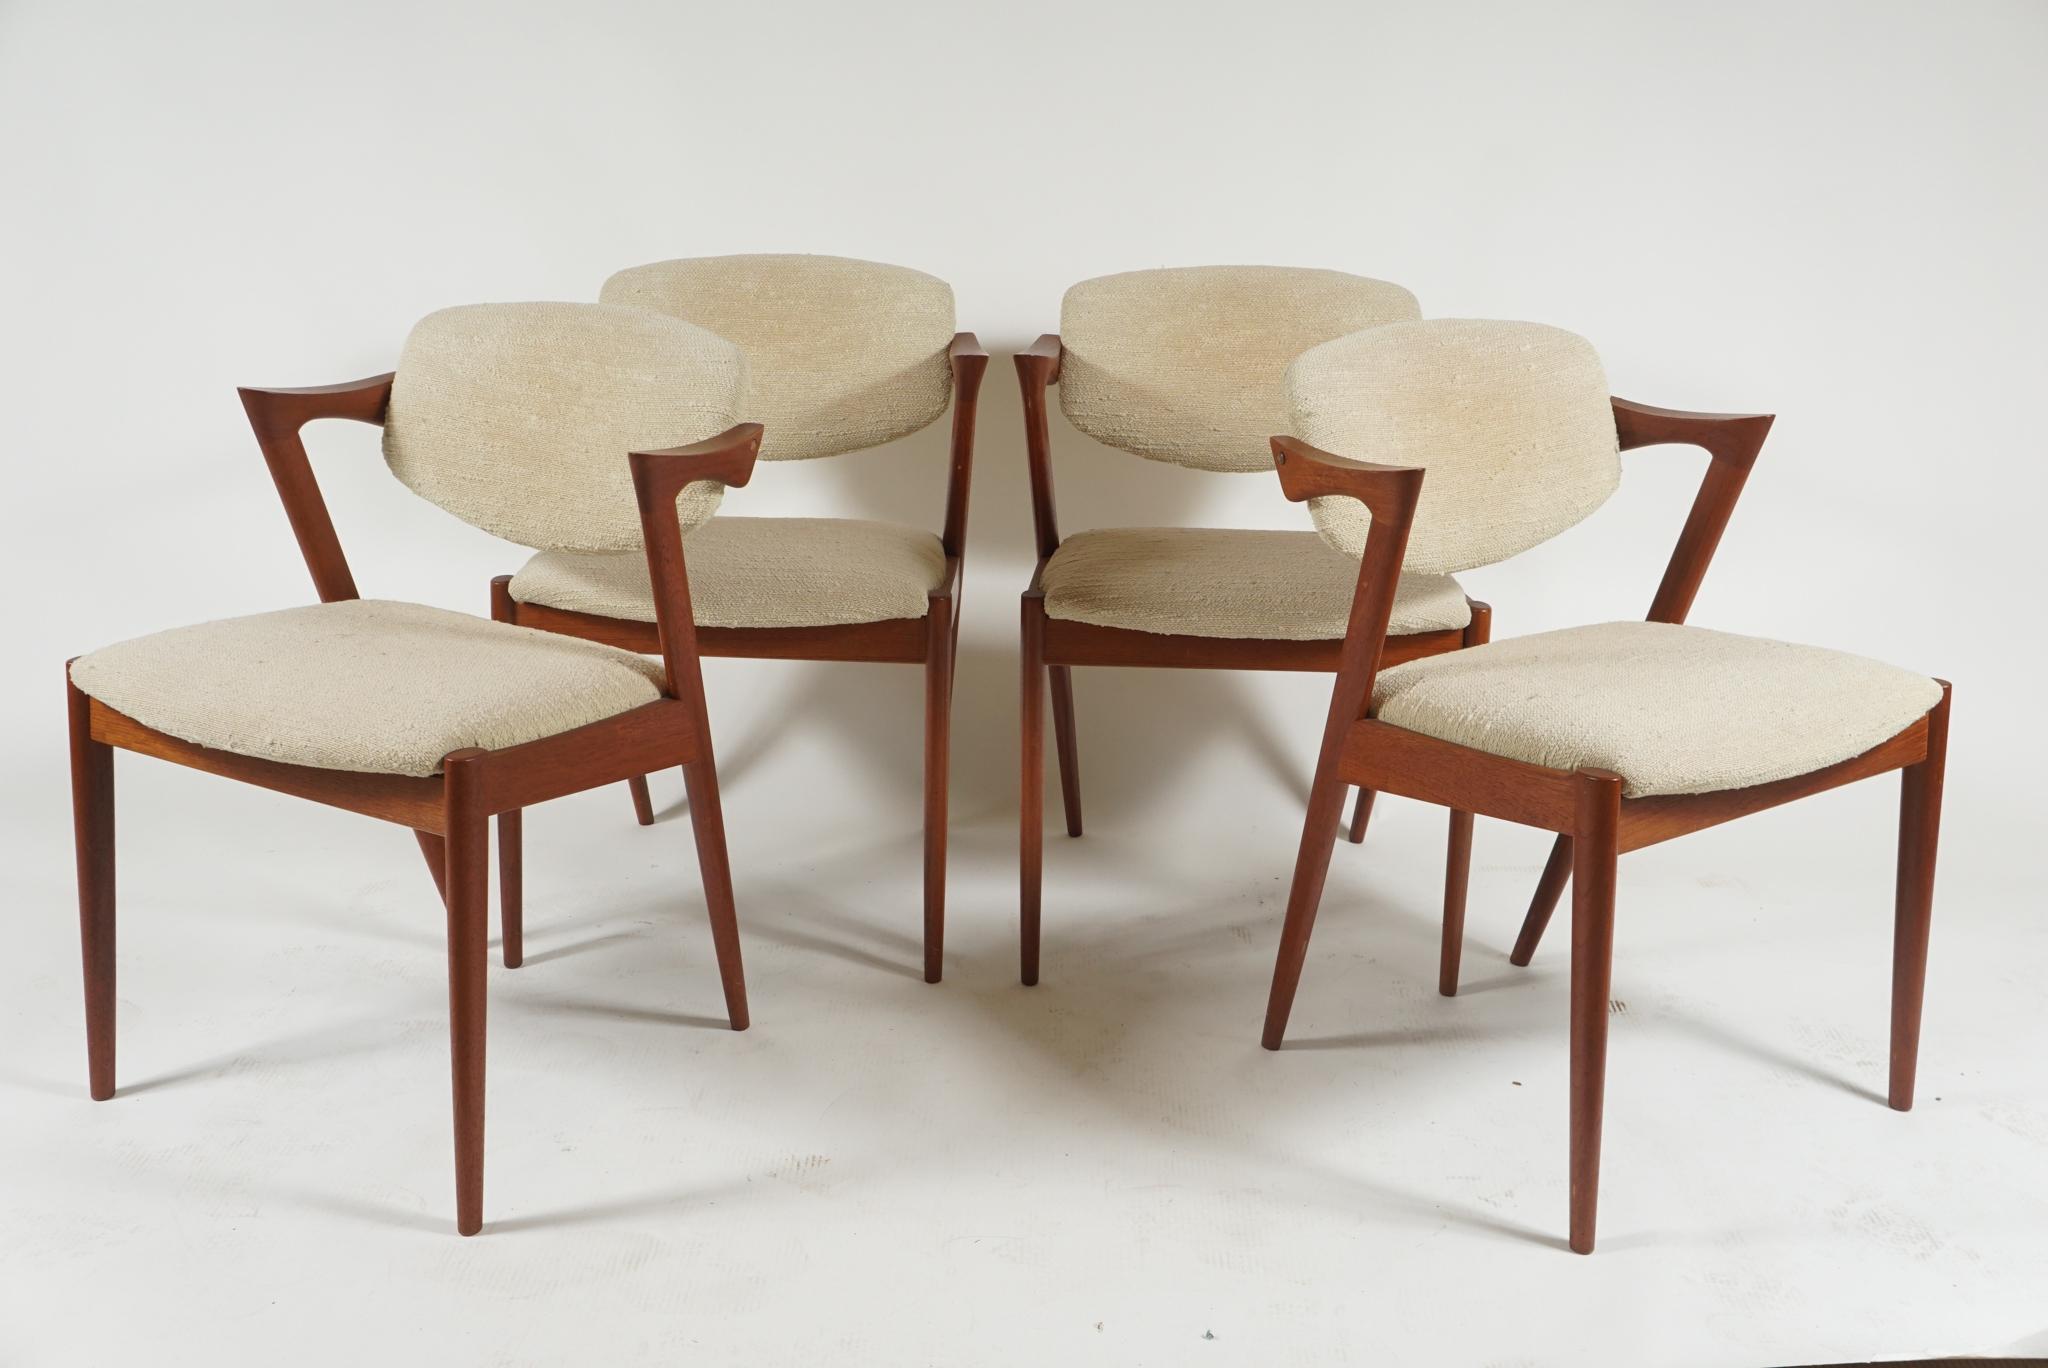 Model #48 designed by Kai Kristiansen. A Minimal Form, circa 1960-1970
Teak wood with movable, adjusting backrest.